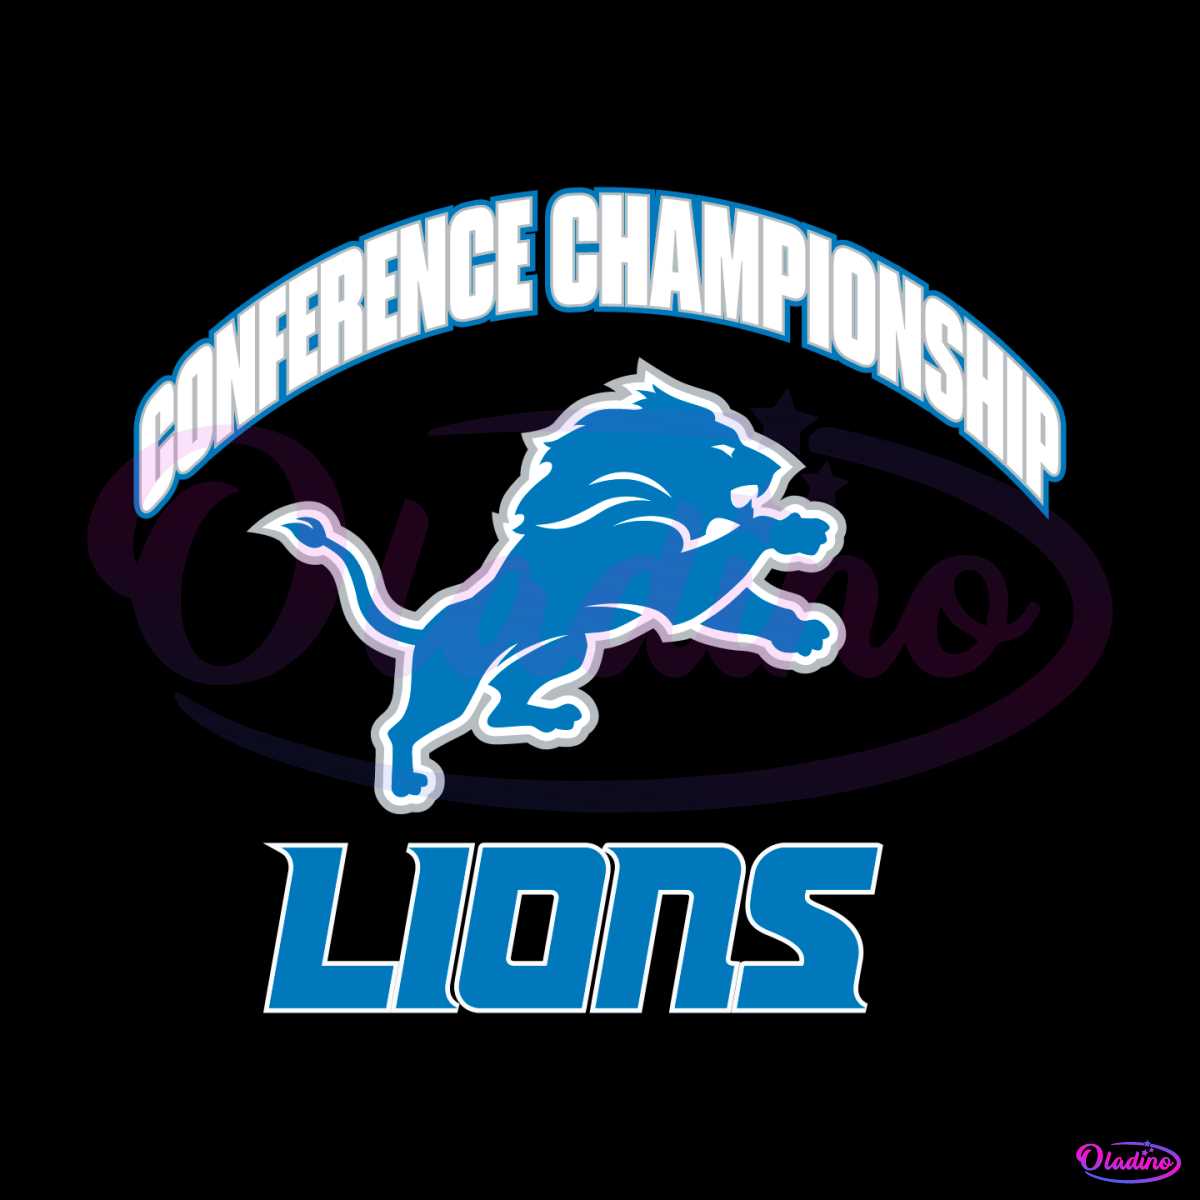 retro-nfl-conference-championship-lions-svg